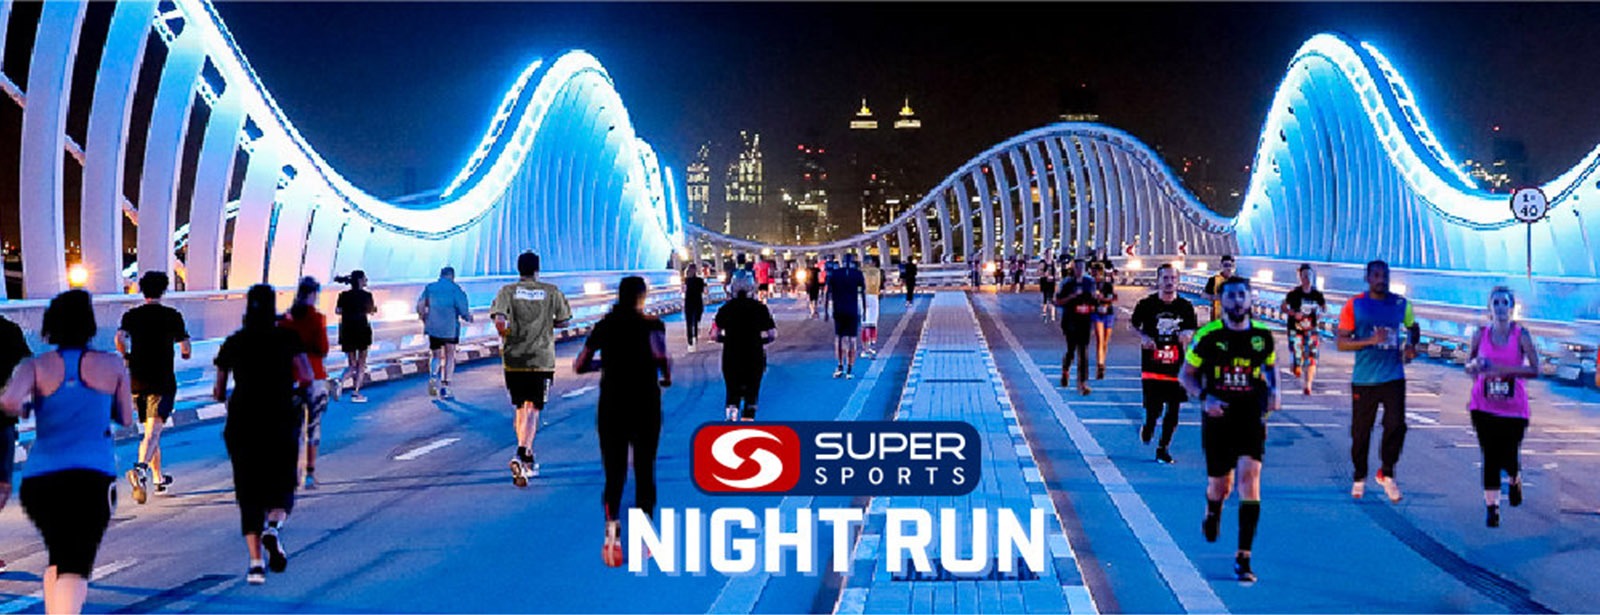 Super Sports Night Run Series - Coming Soon in UAE